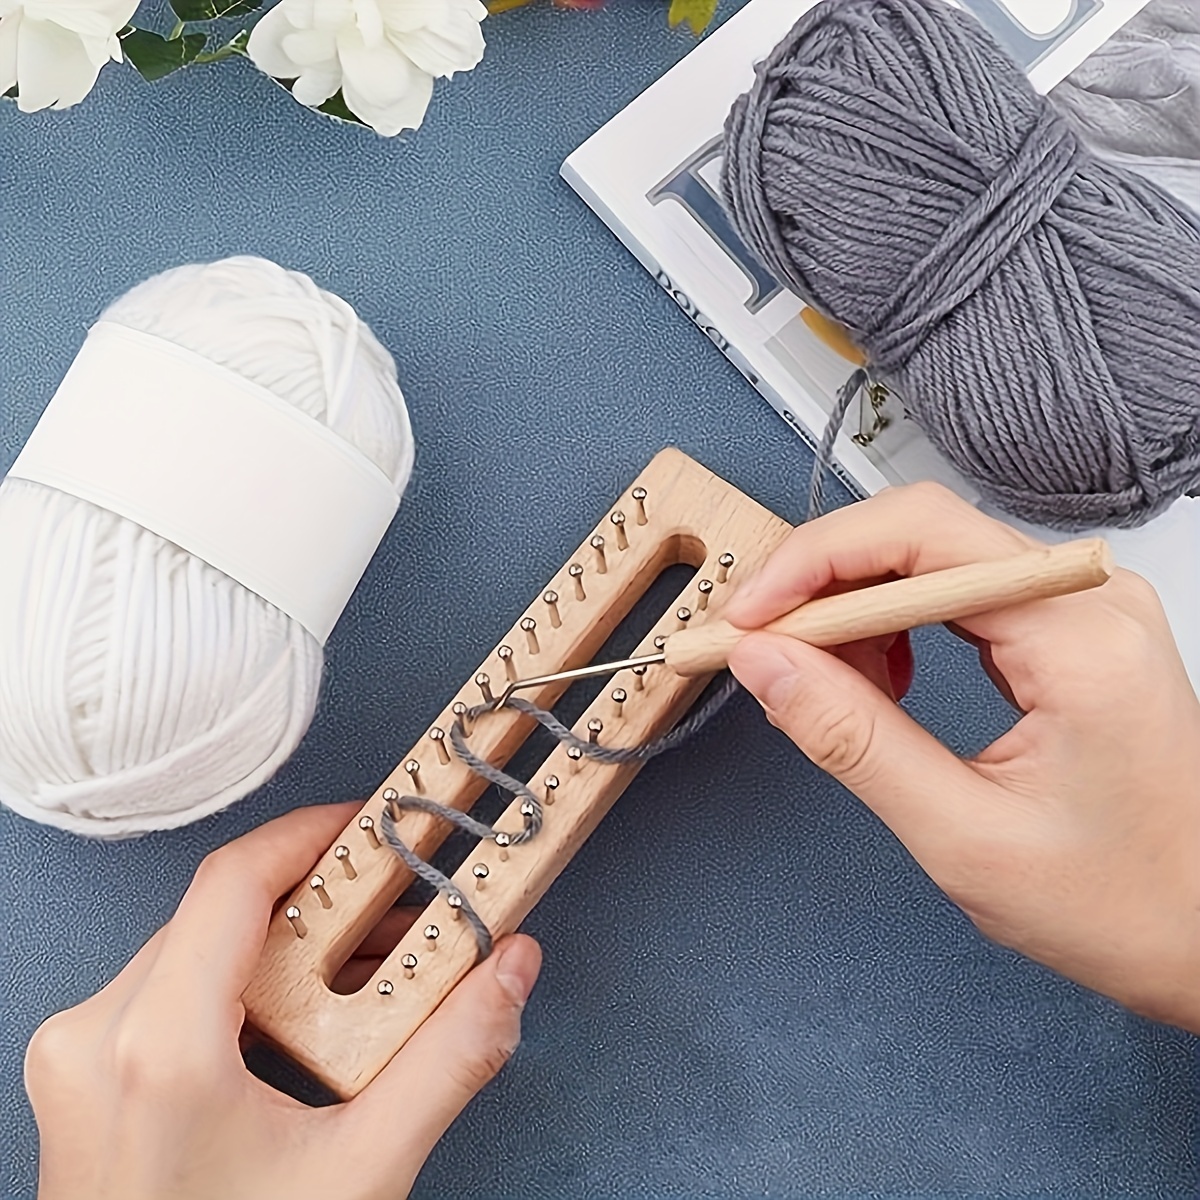  PenRux Knitting Loom, Easy Operation Long Life Square Knitting  Loom for Blankets